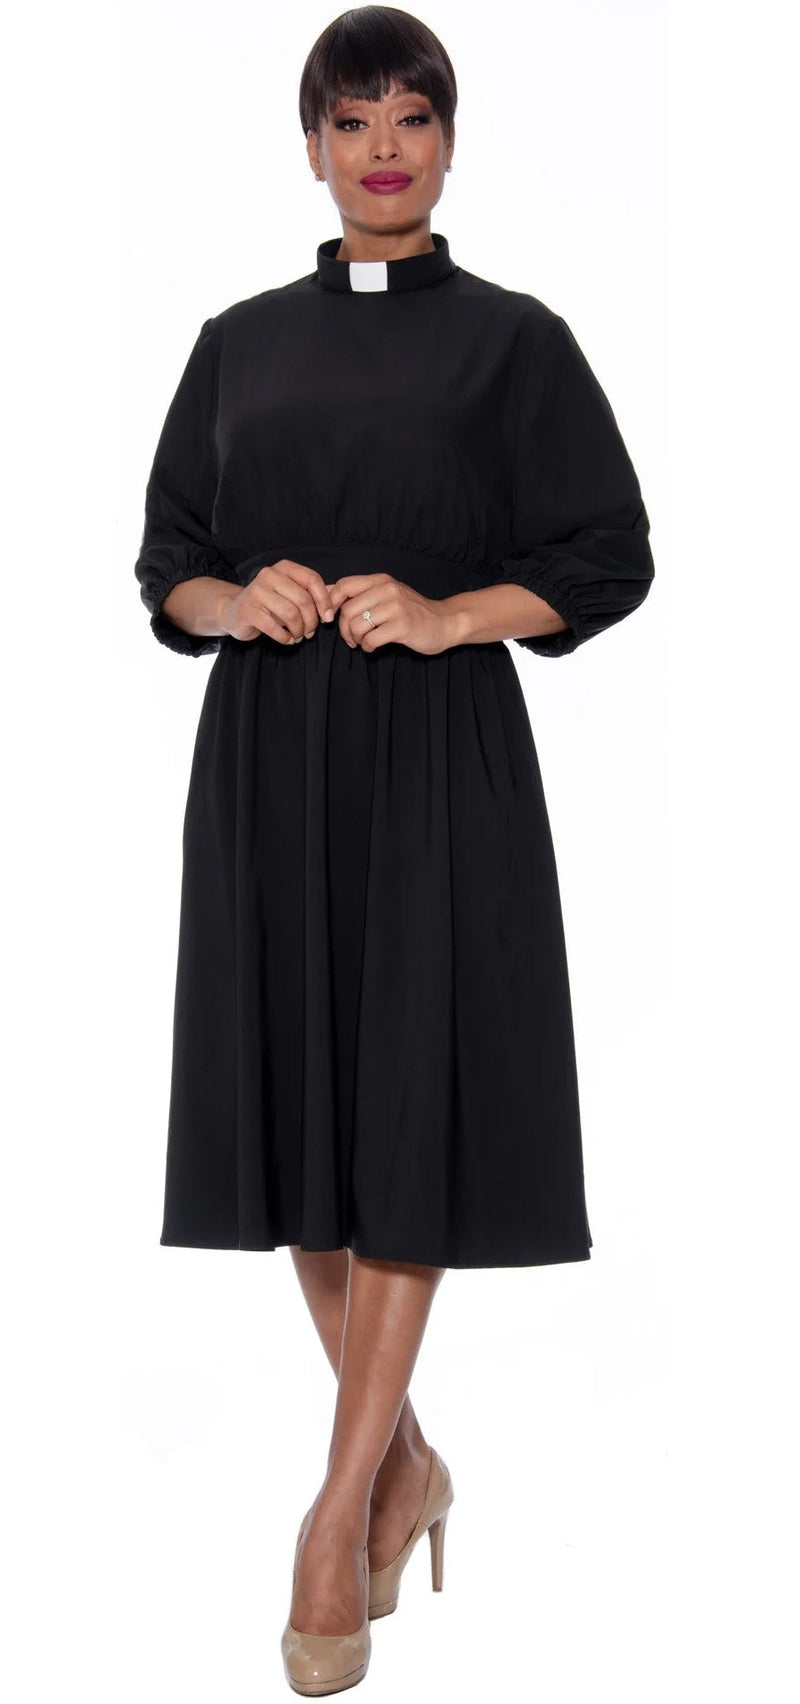 Divine Clergy Dress RR9151